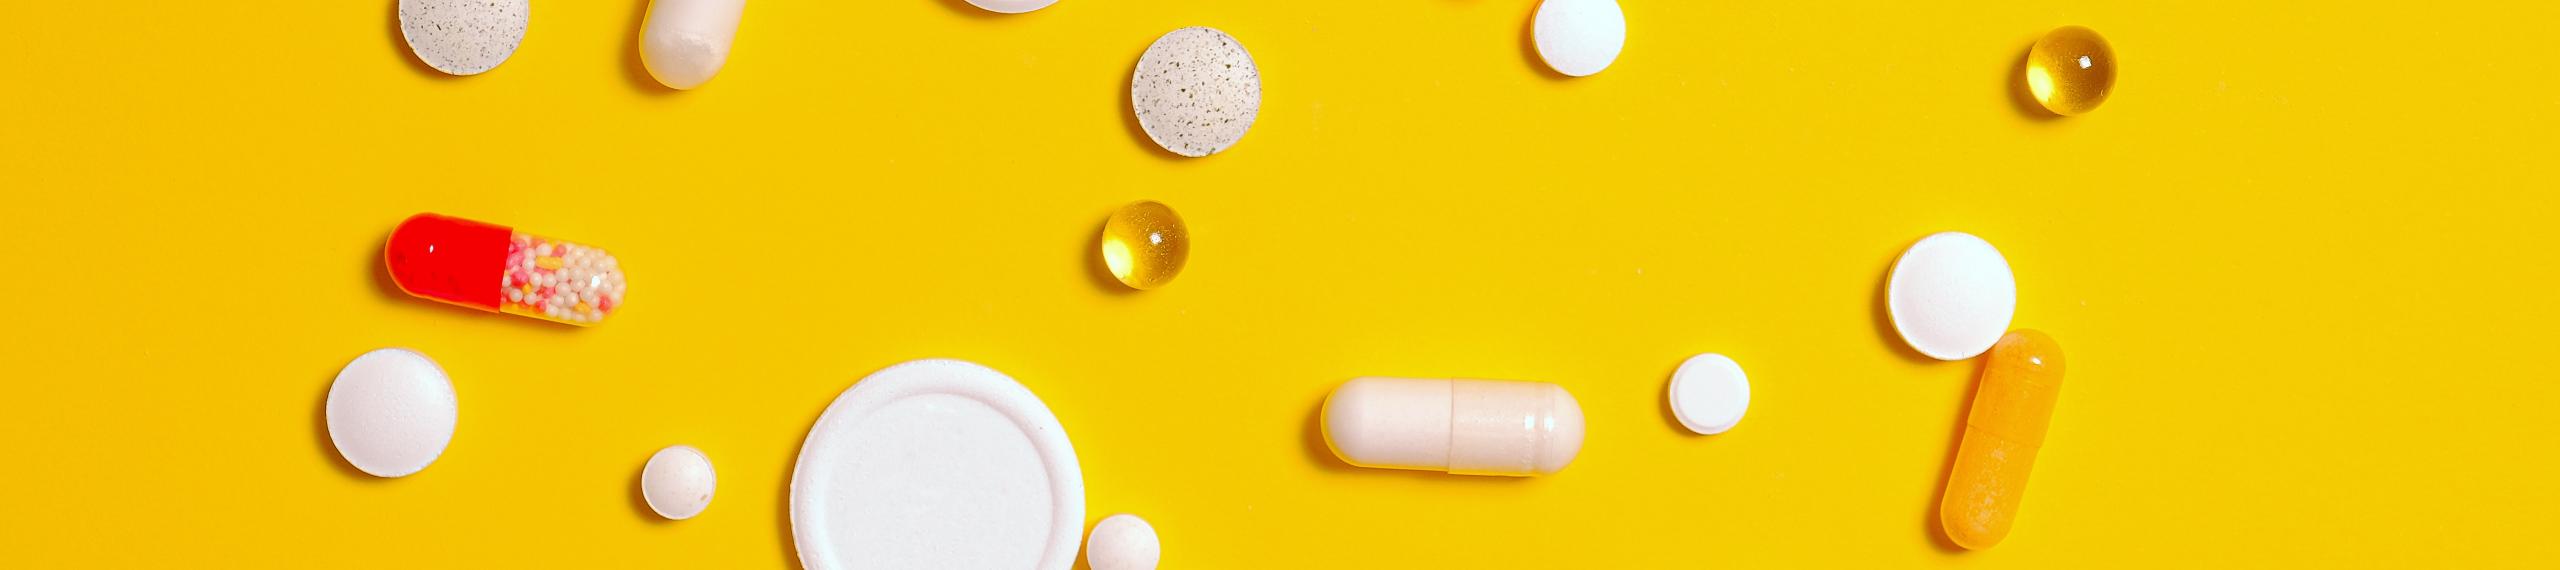 Medication Pills on Yellow Surface